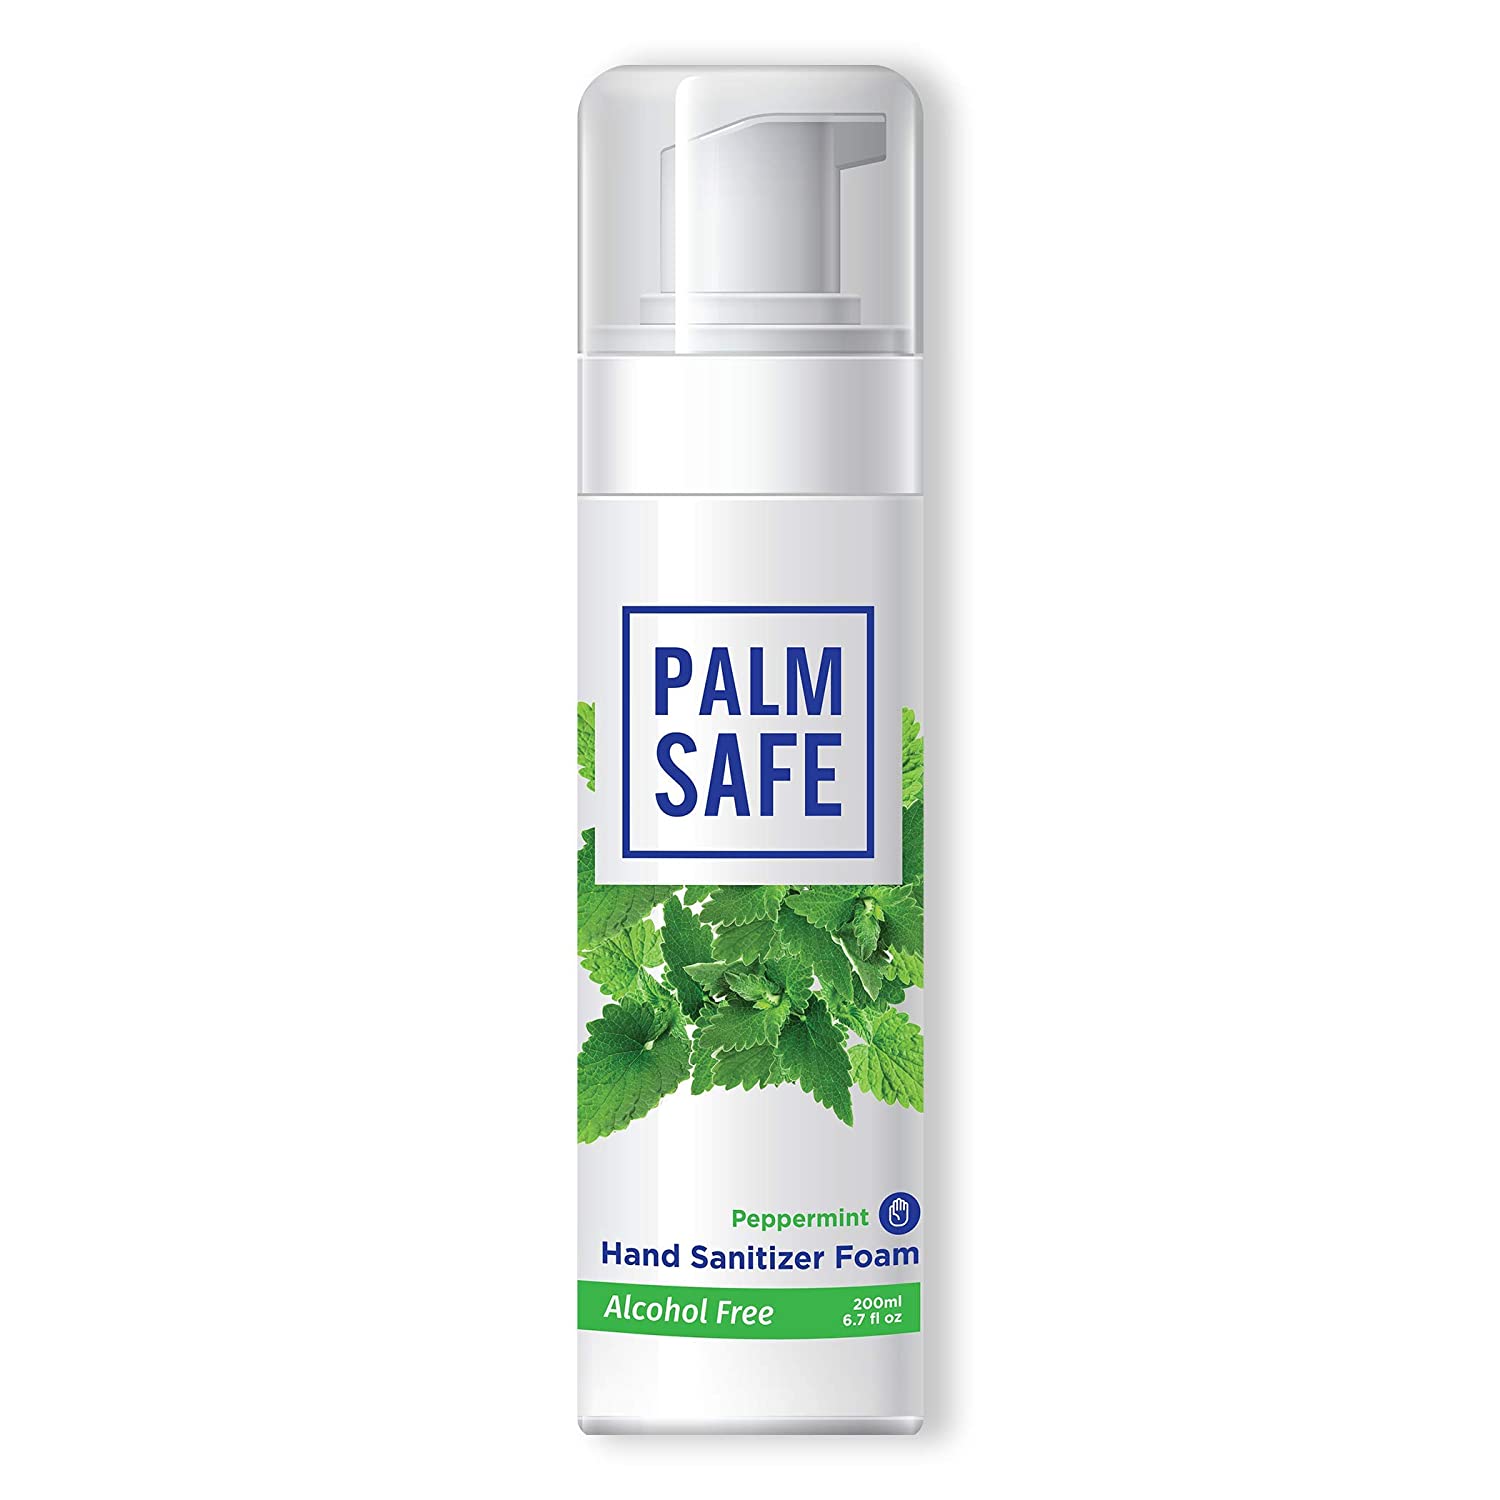 Palm Safe's Hand Sanitizer